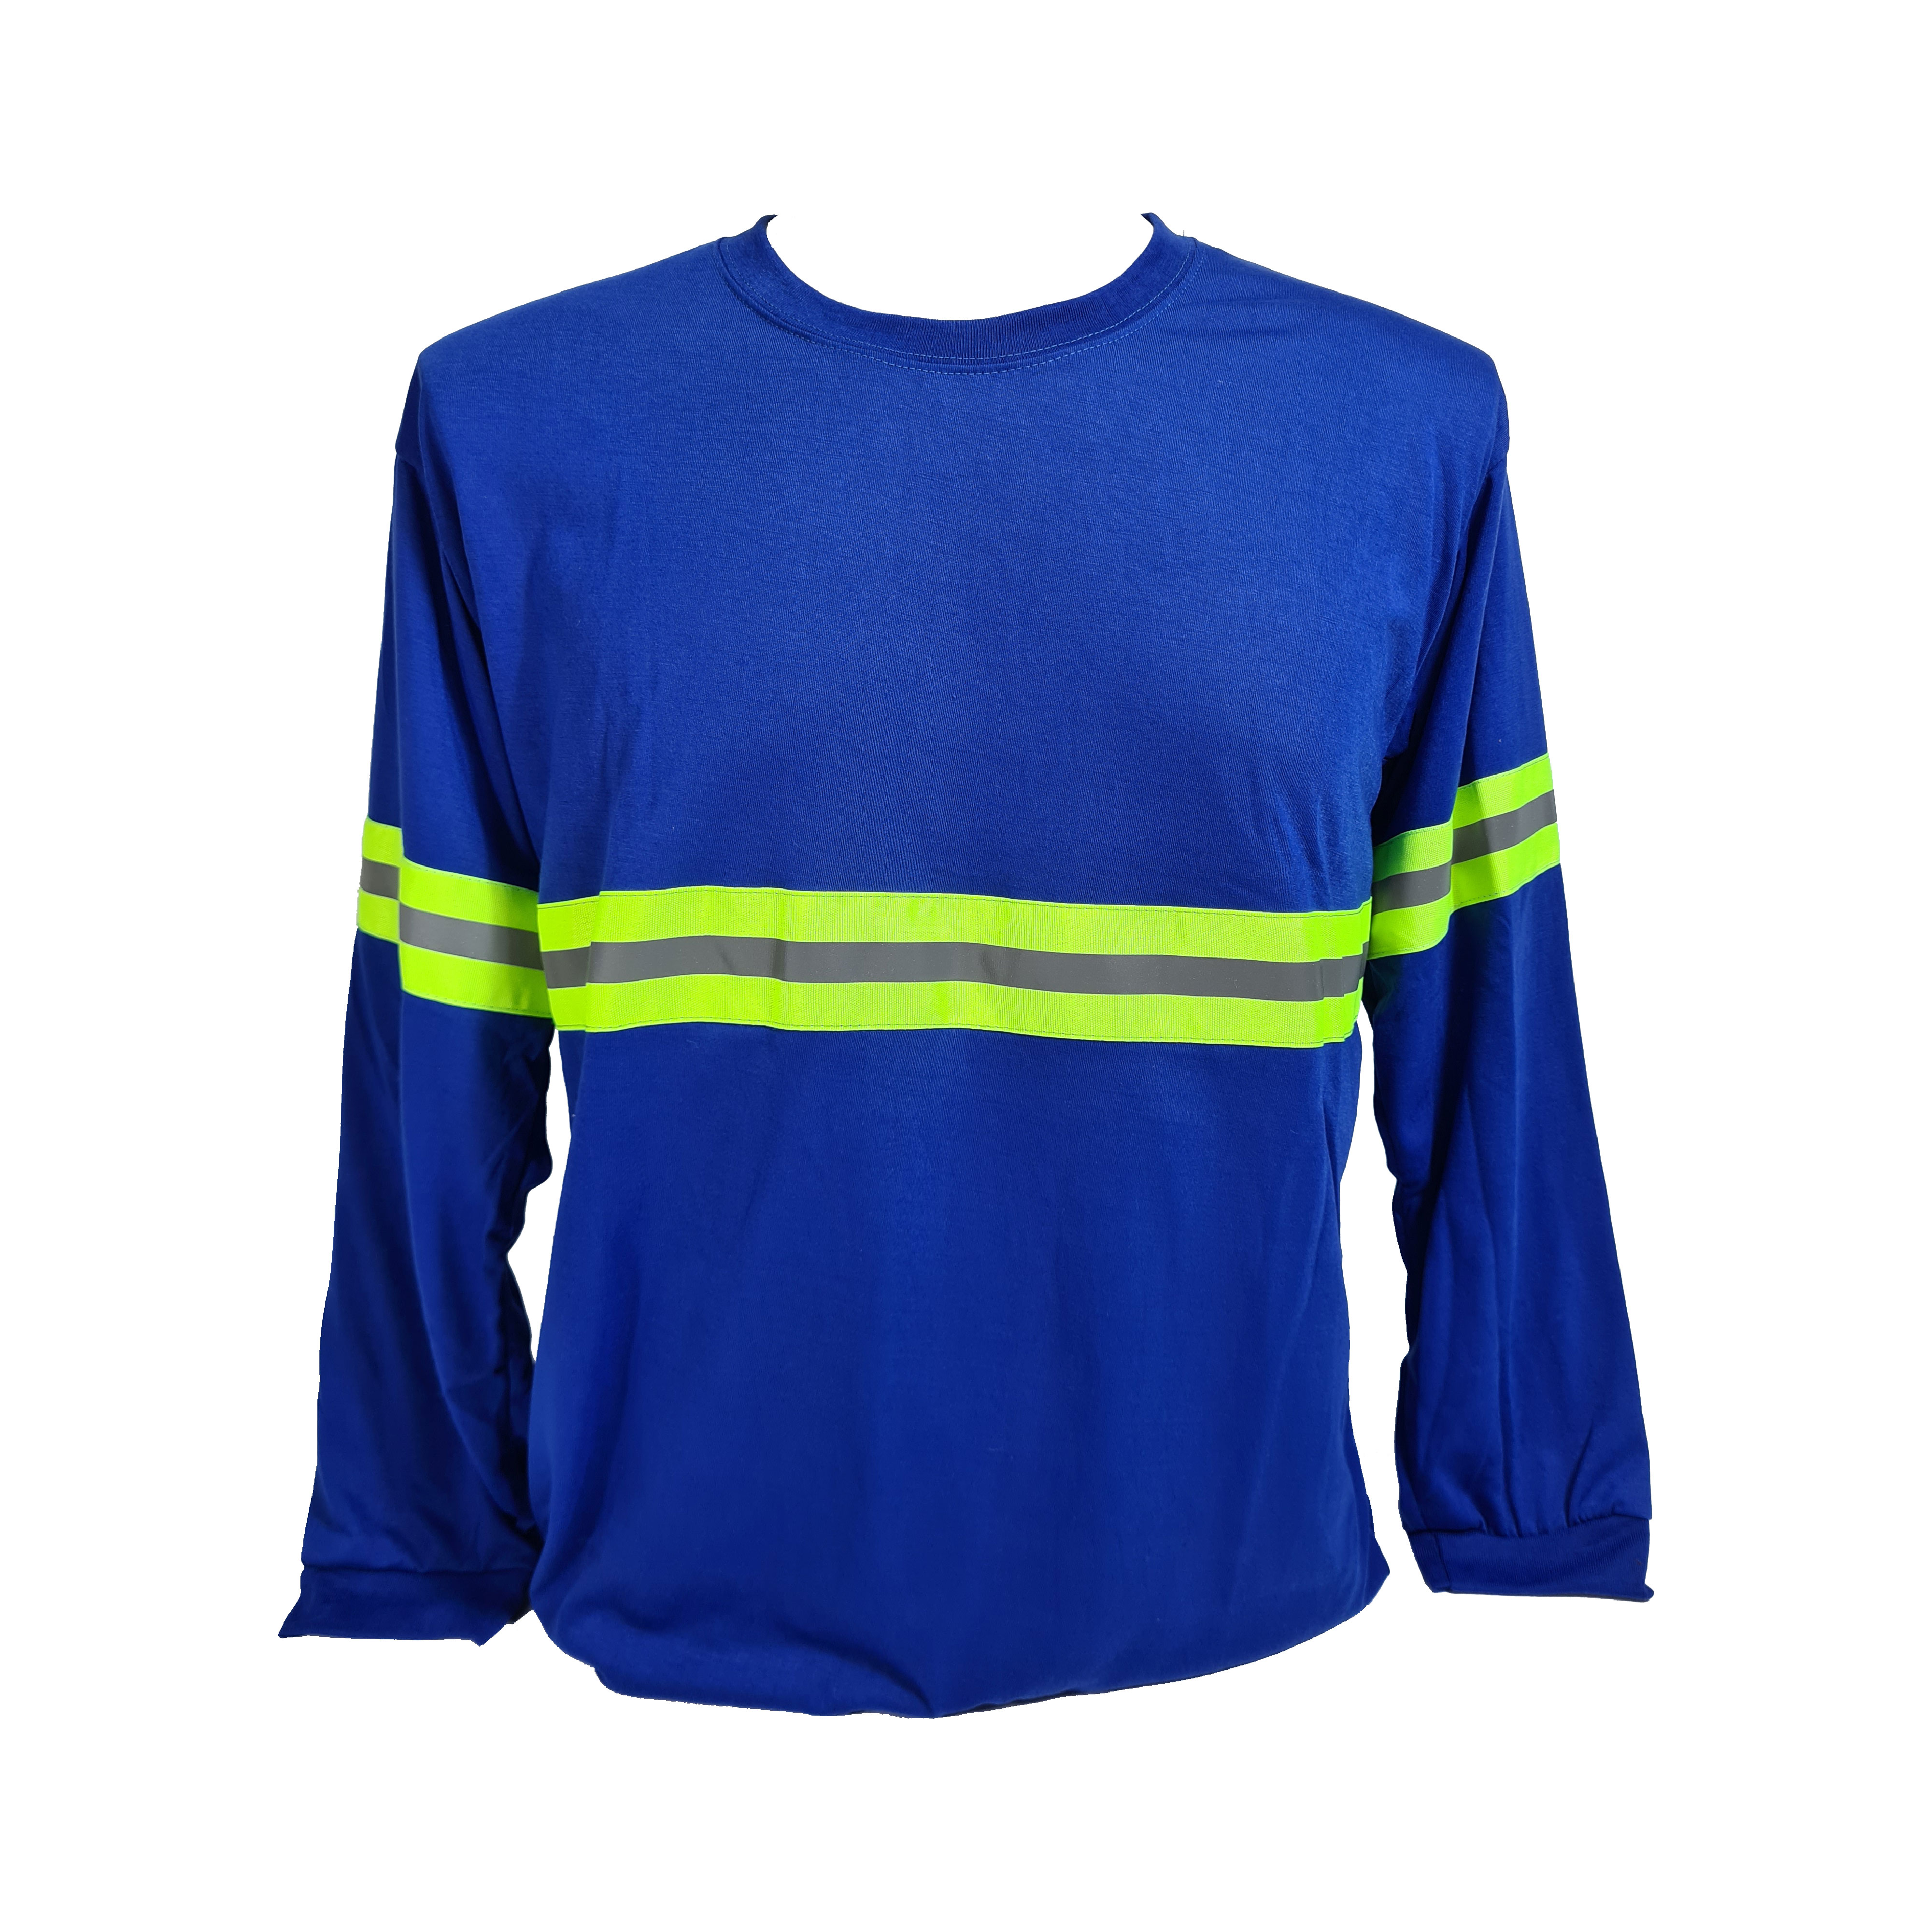 Construction Reflectorized Long Sleeve Shirt | Long Sleeves Sweatshirts ...